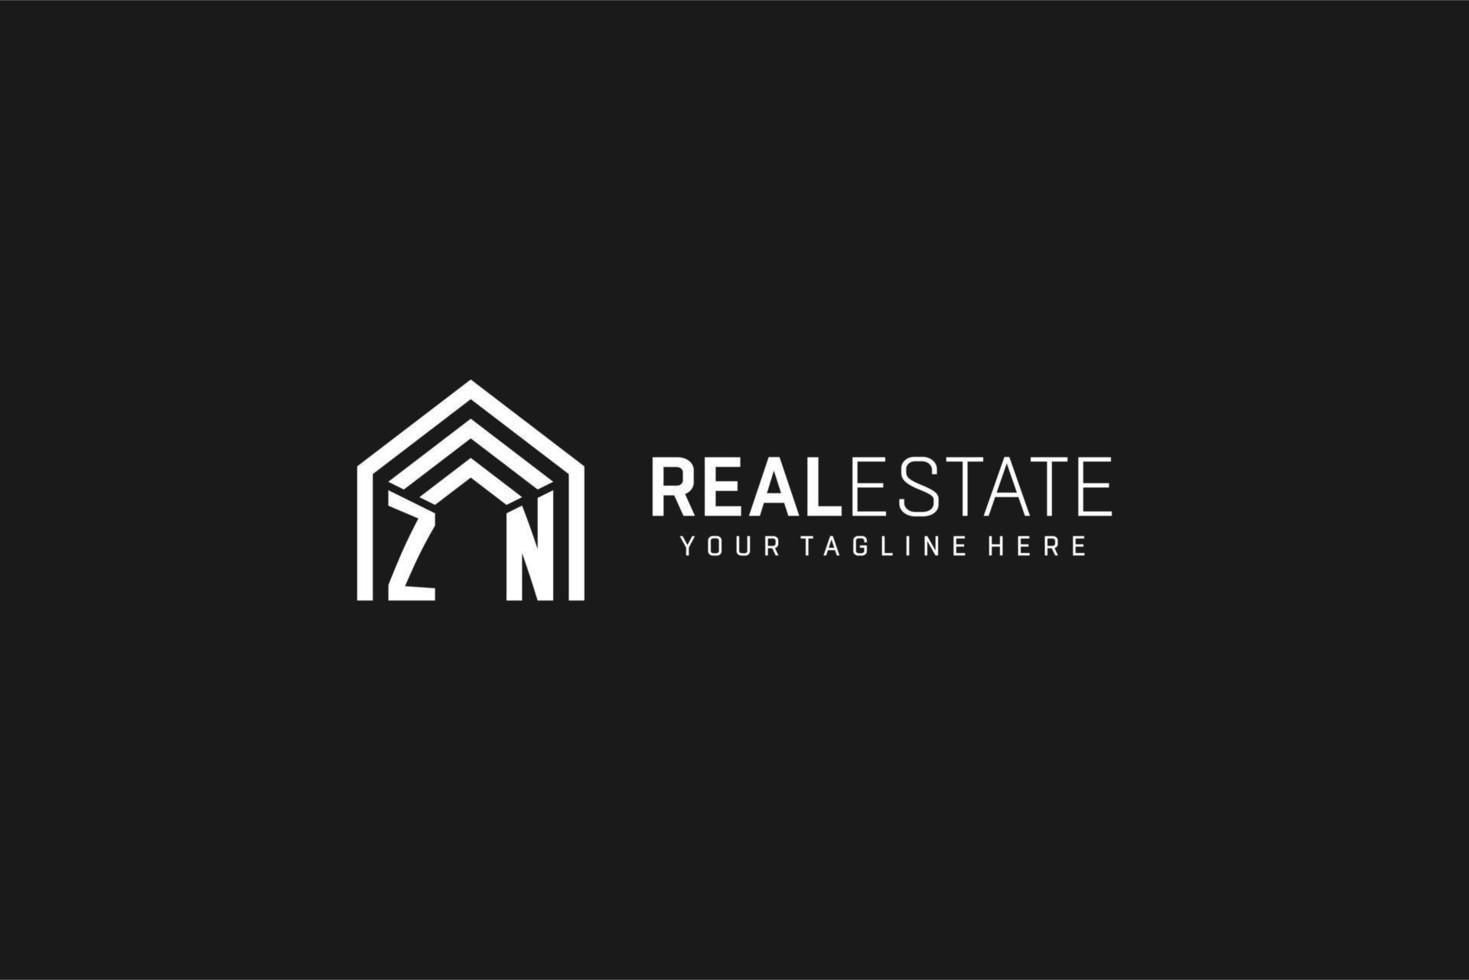 Letter ZN house roof shape logo, creative real estate monogram logo style vector